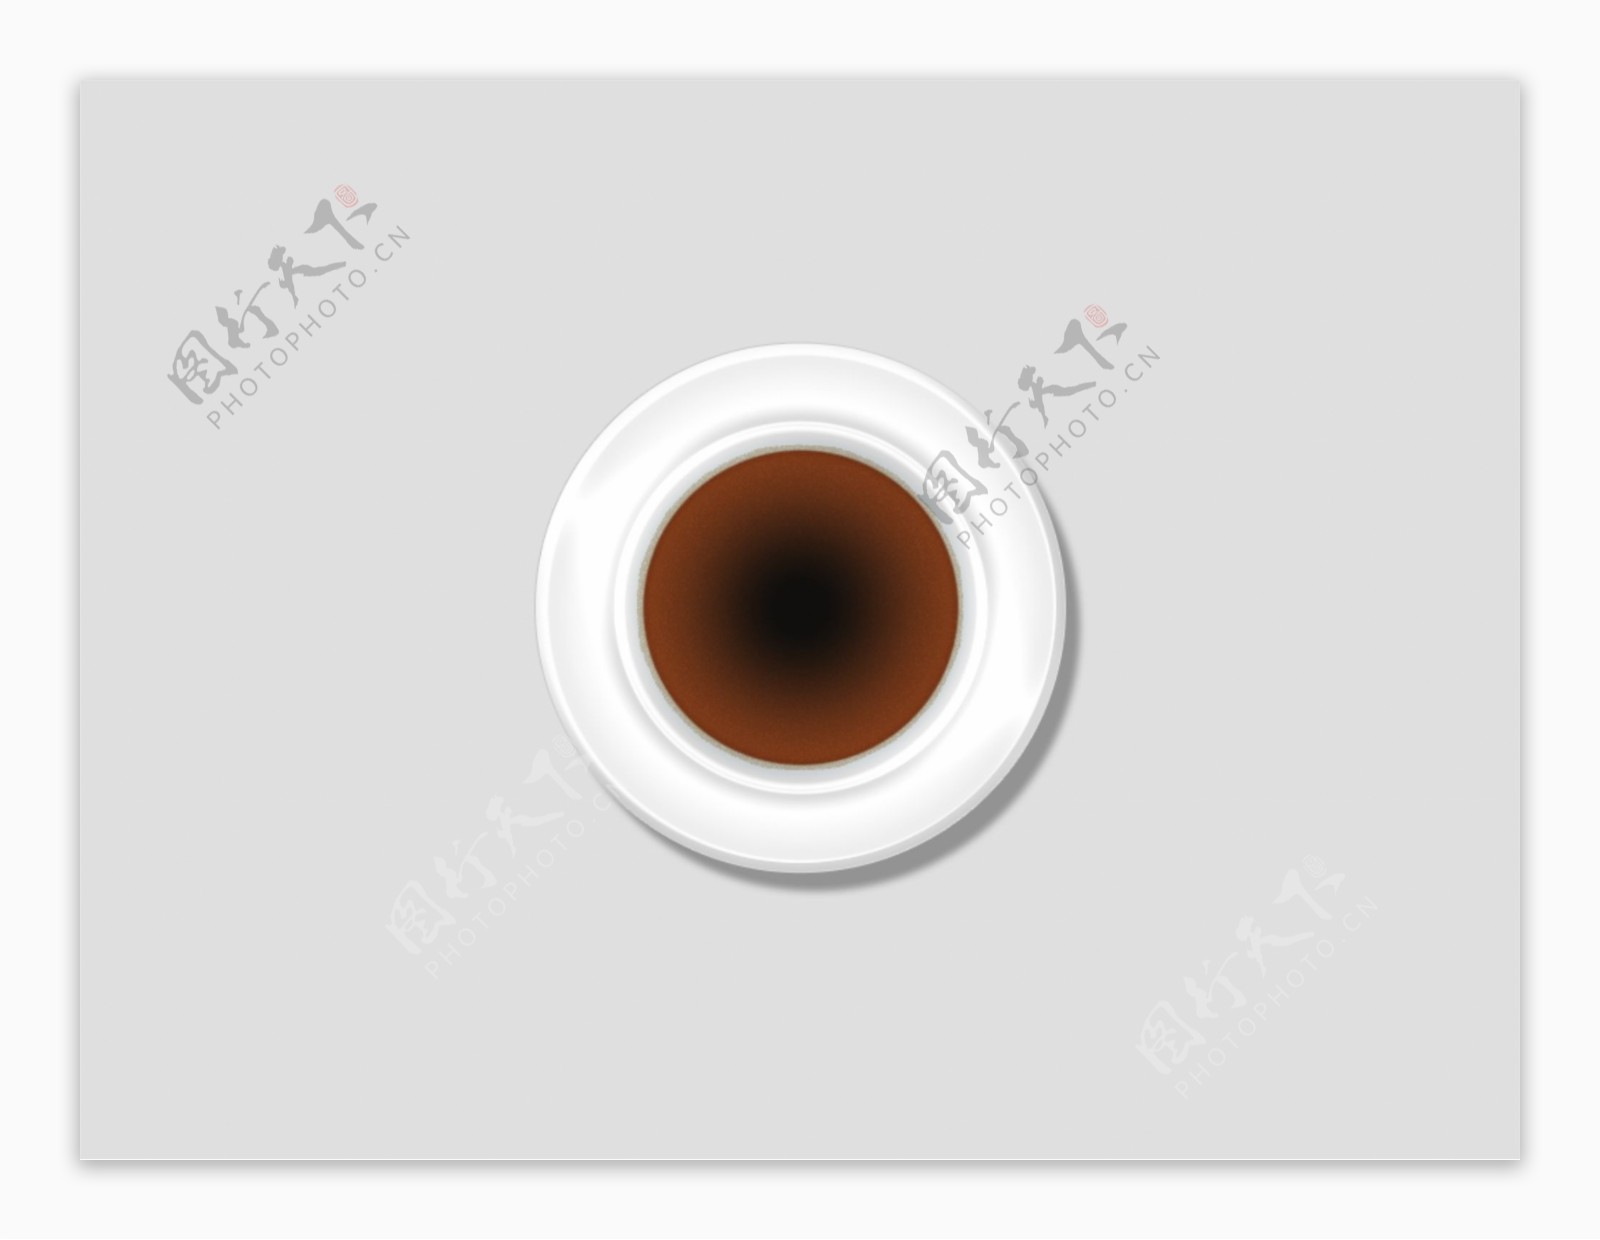 网页UI咖啡咖啡杯icon图标设计